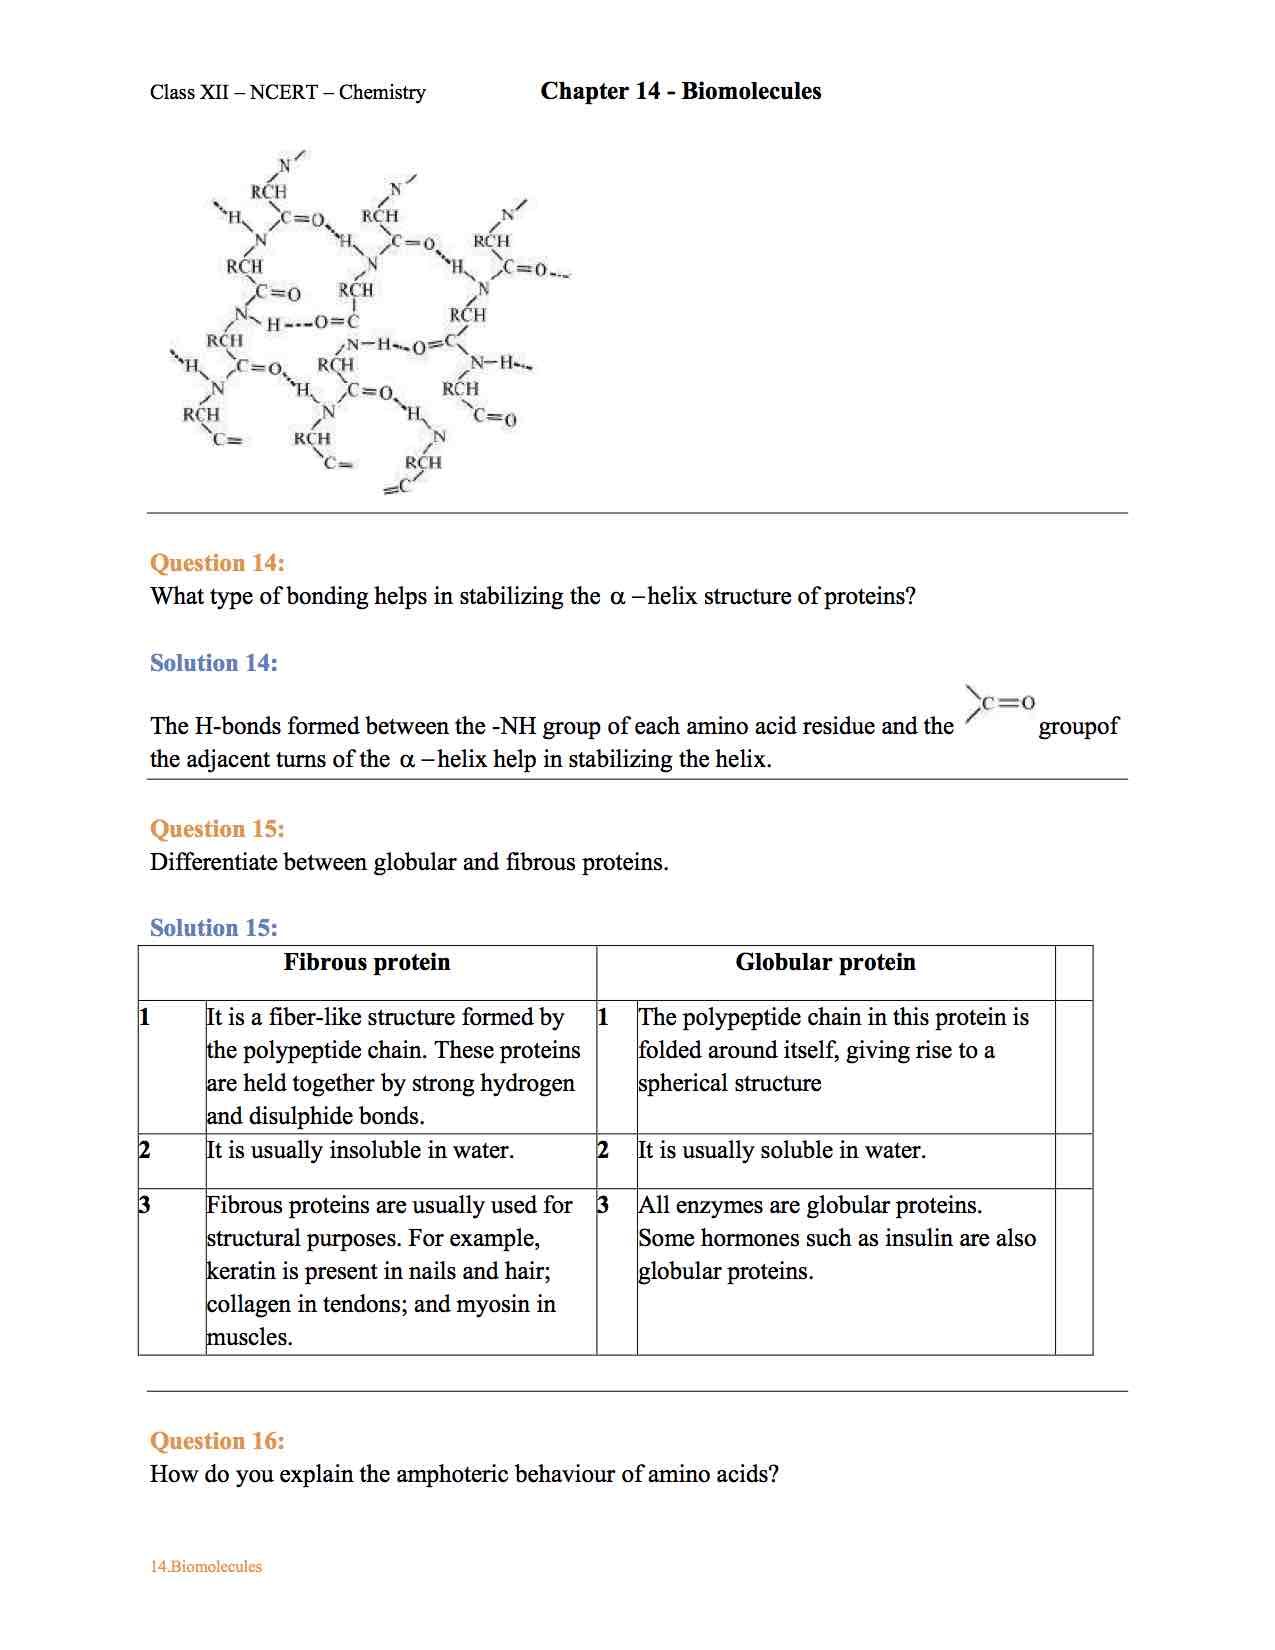 assignment on biomolecules class 12